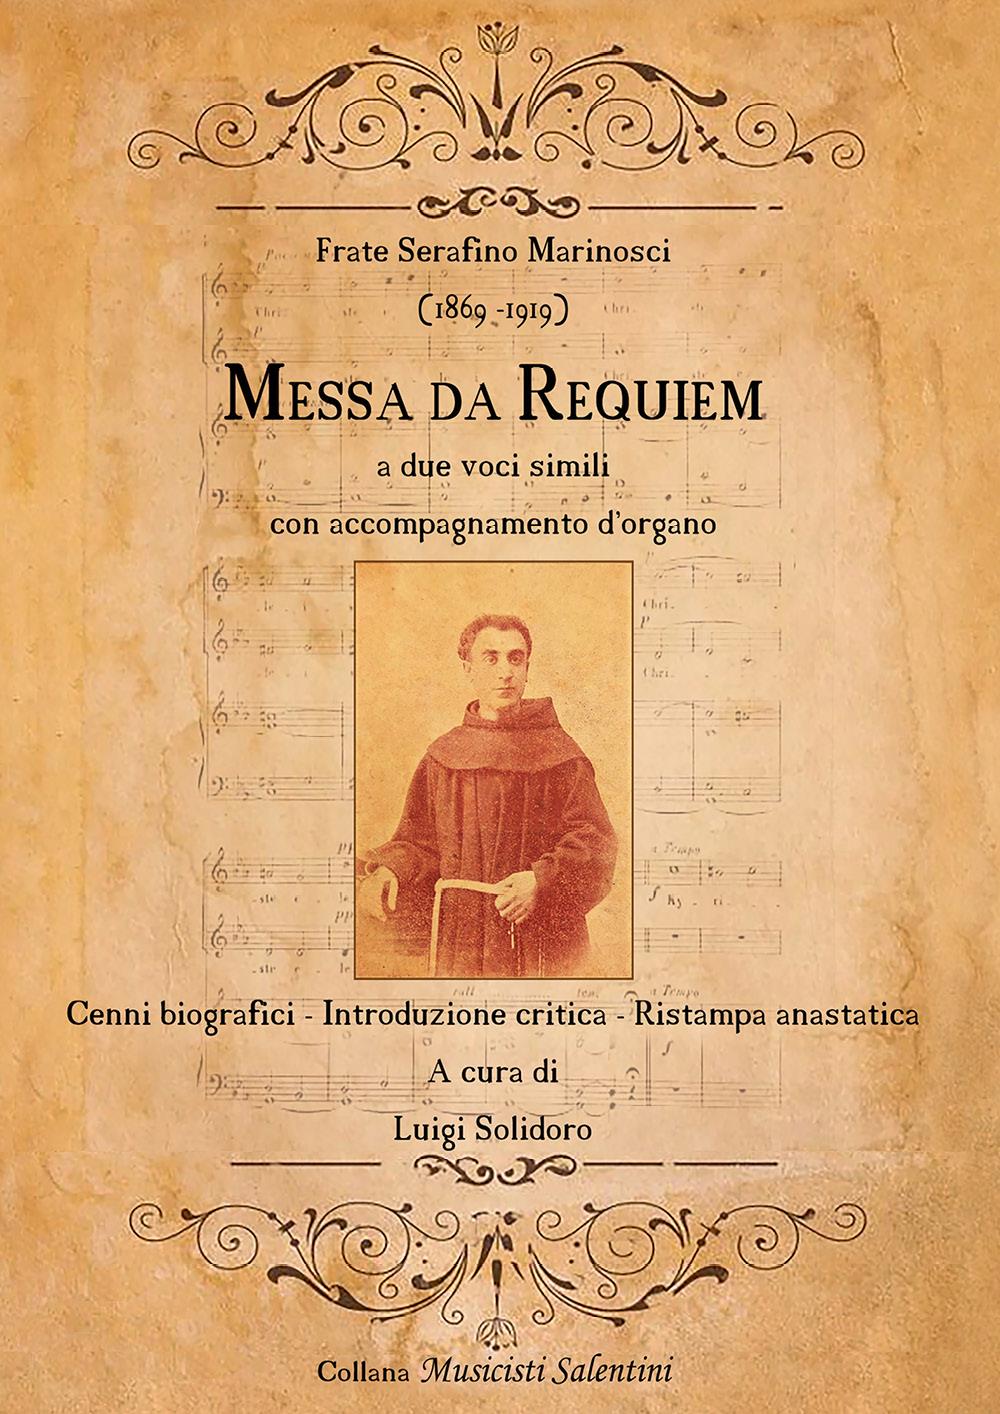 Frate Serafino Marinosci (1869 - 1919): Messa da Requiem. Cenni biografici - Introduzione critica - Ristampa anastatica